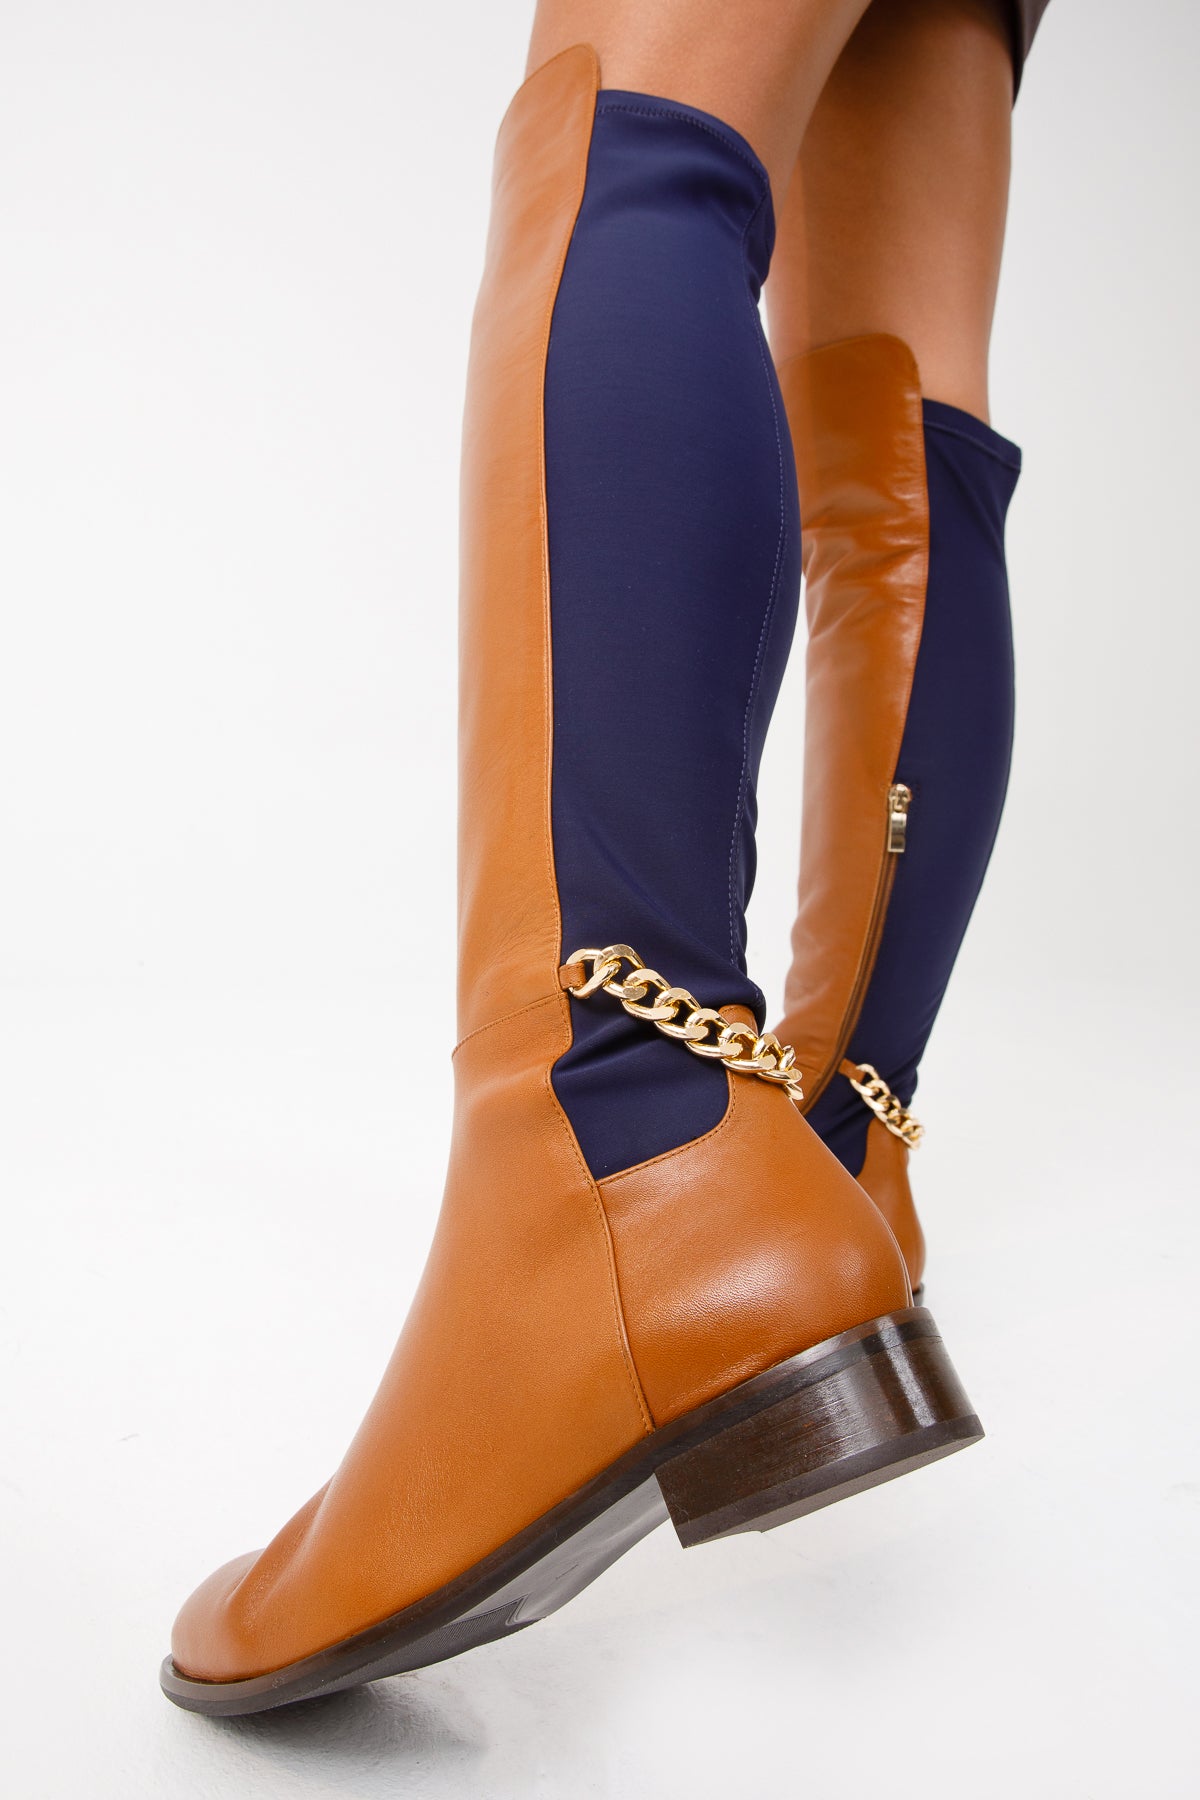 The Tallin Tan Leather Knee High Women Boot